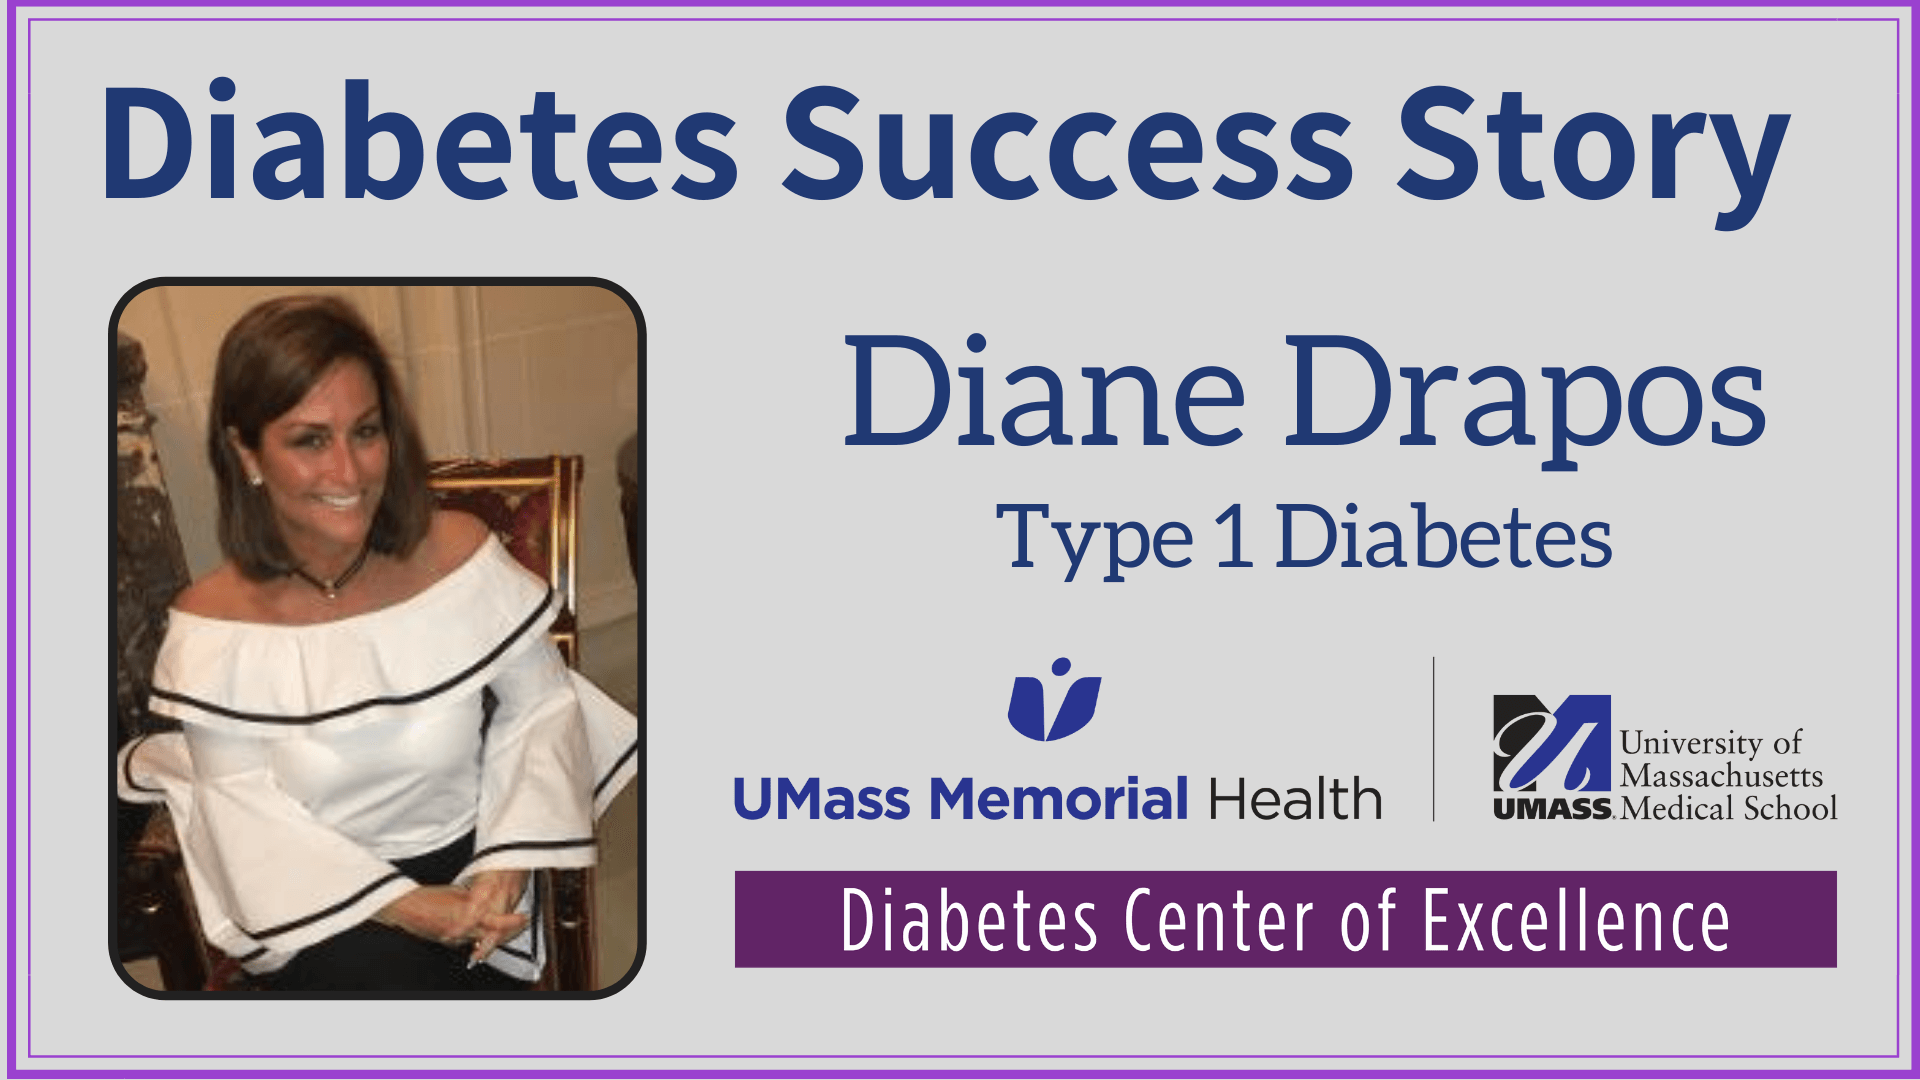 diane-drapos-type-1-diabetes-success